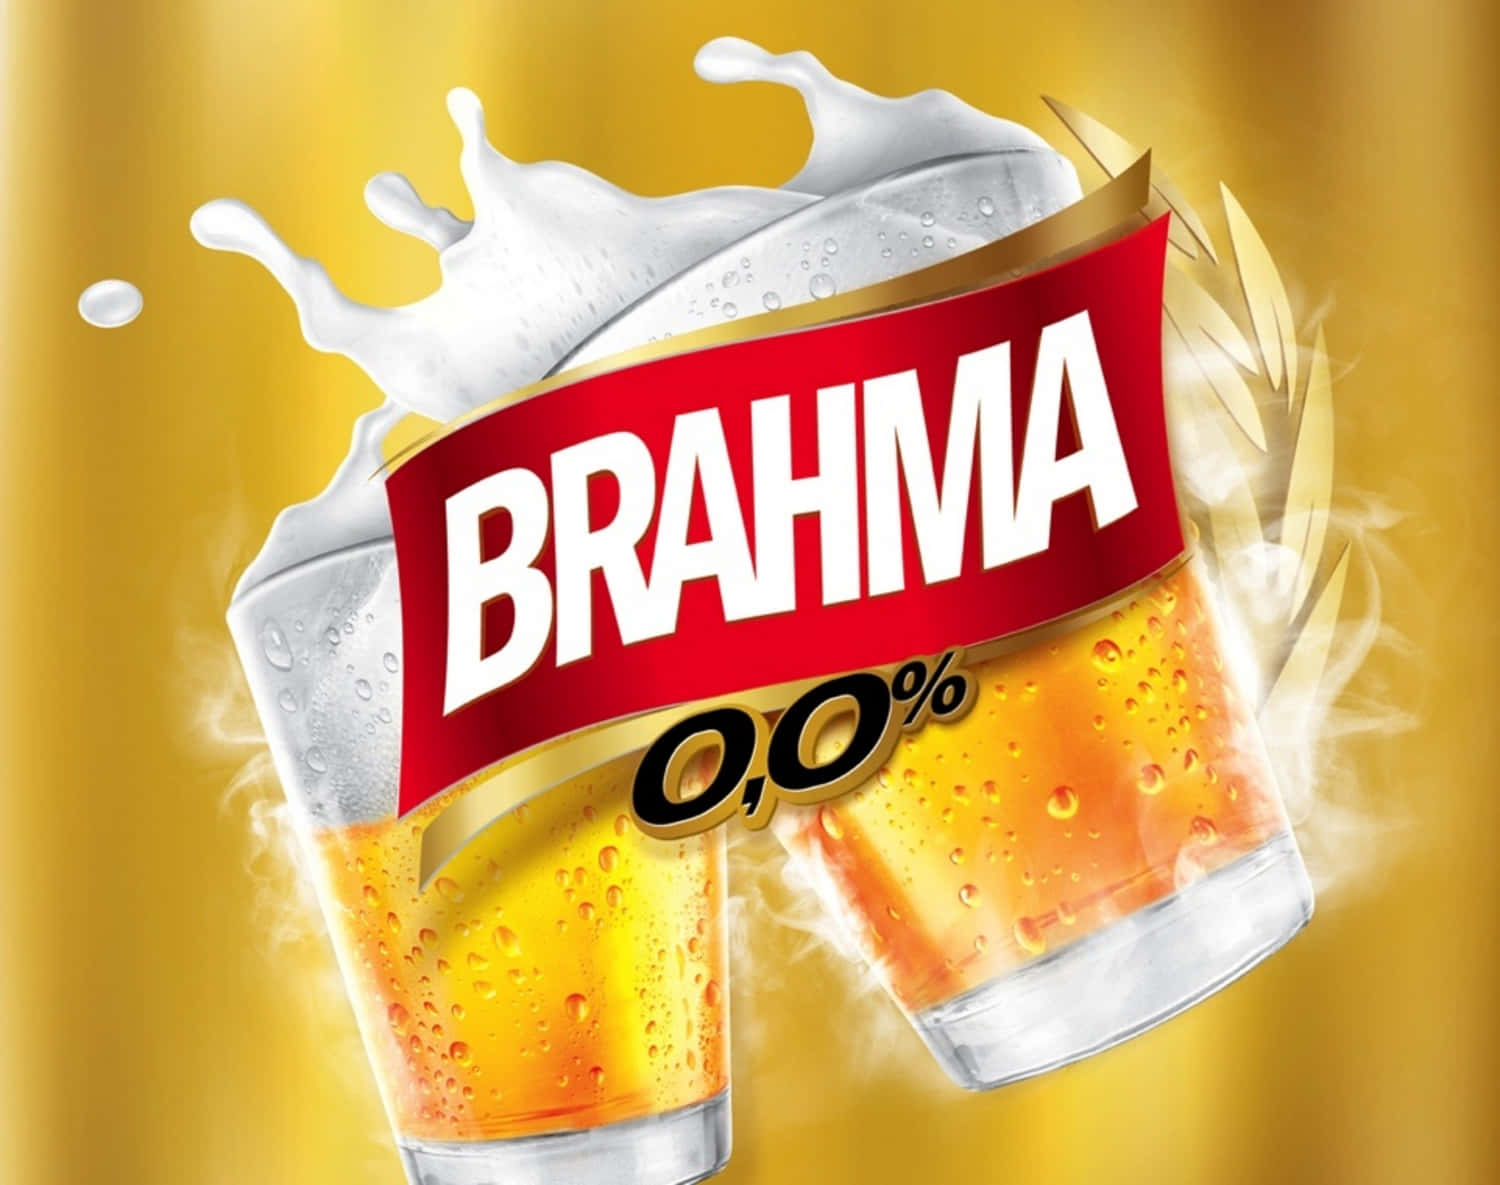 Brazilian Brahma Zero Percent Label Design Wallpaper